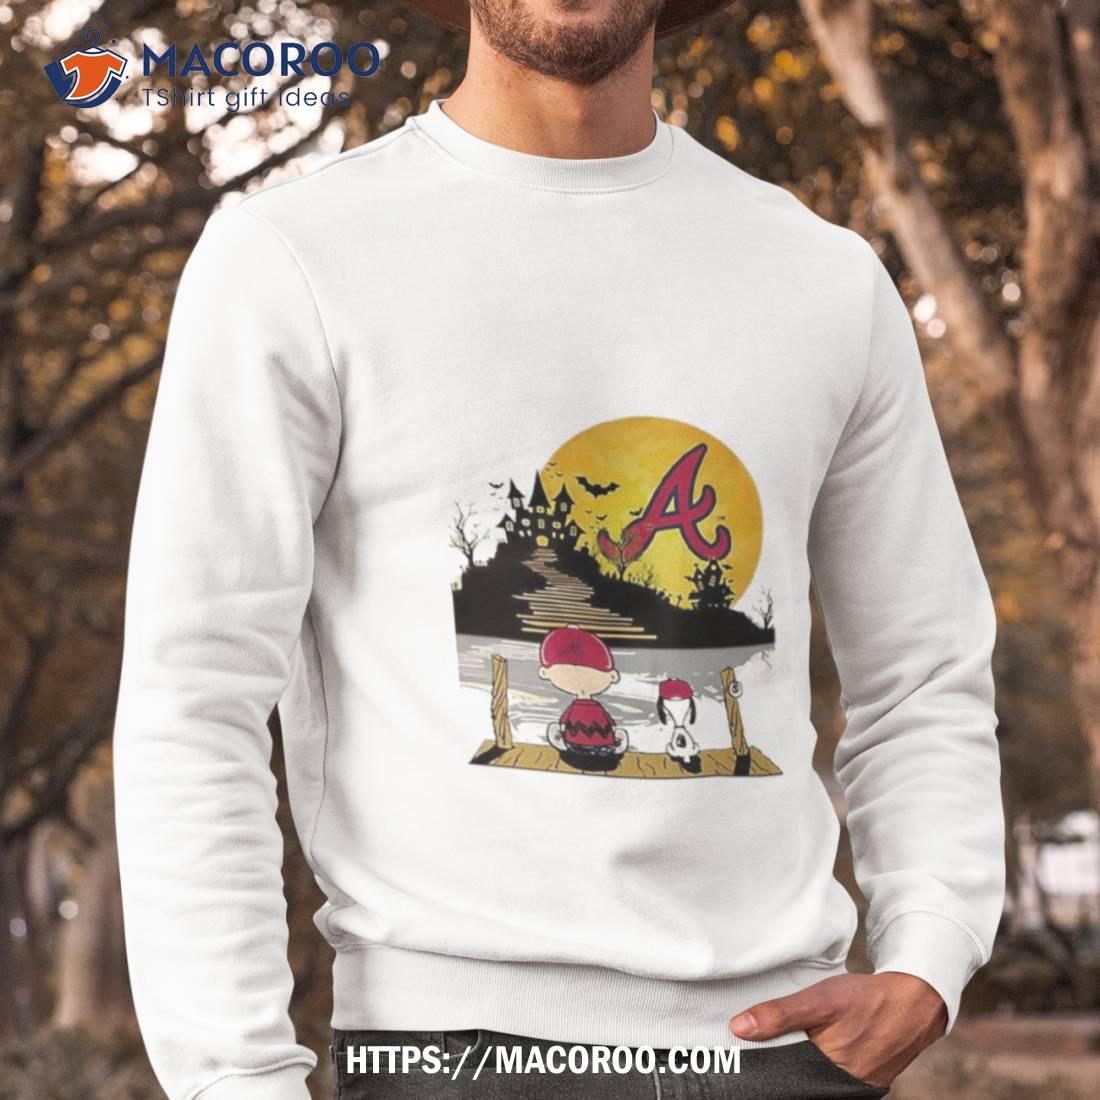 Atlanta Braves Snoopy Peanuts Christmas Shirt Hoodie Sweater